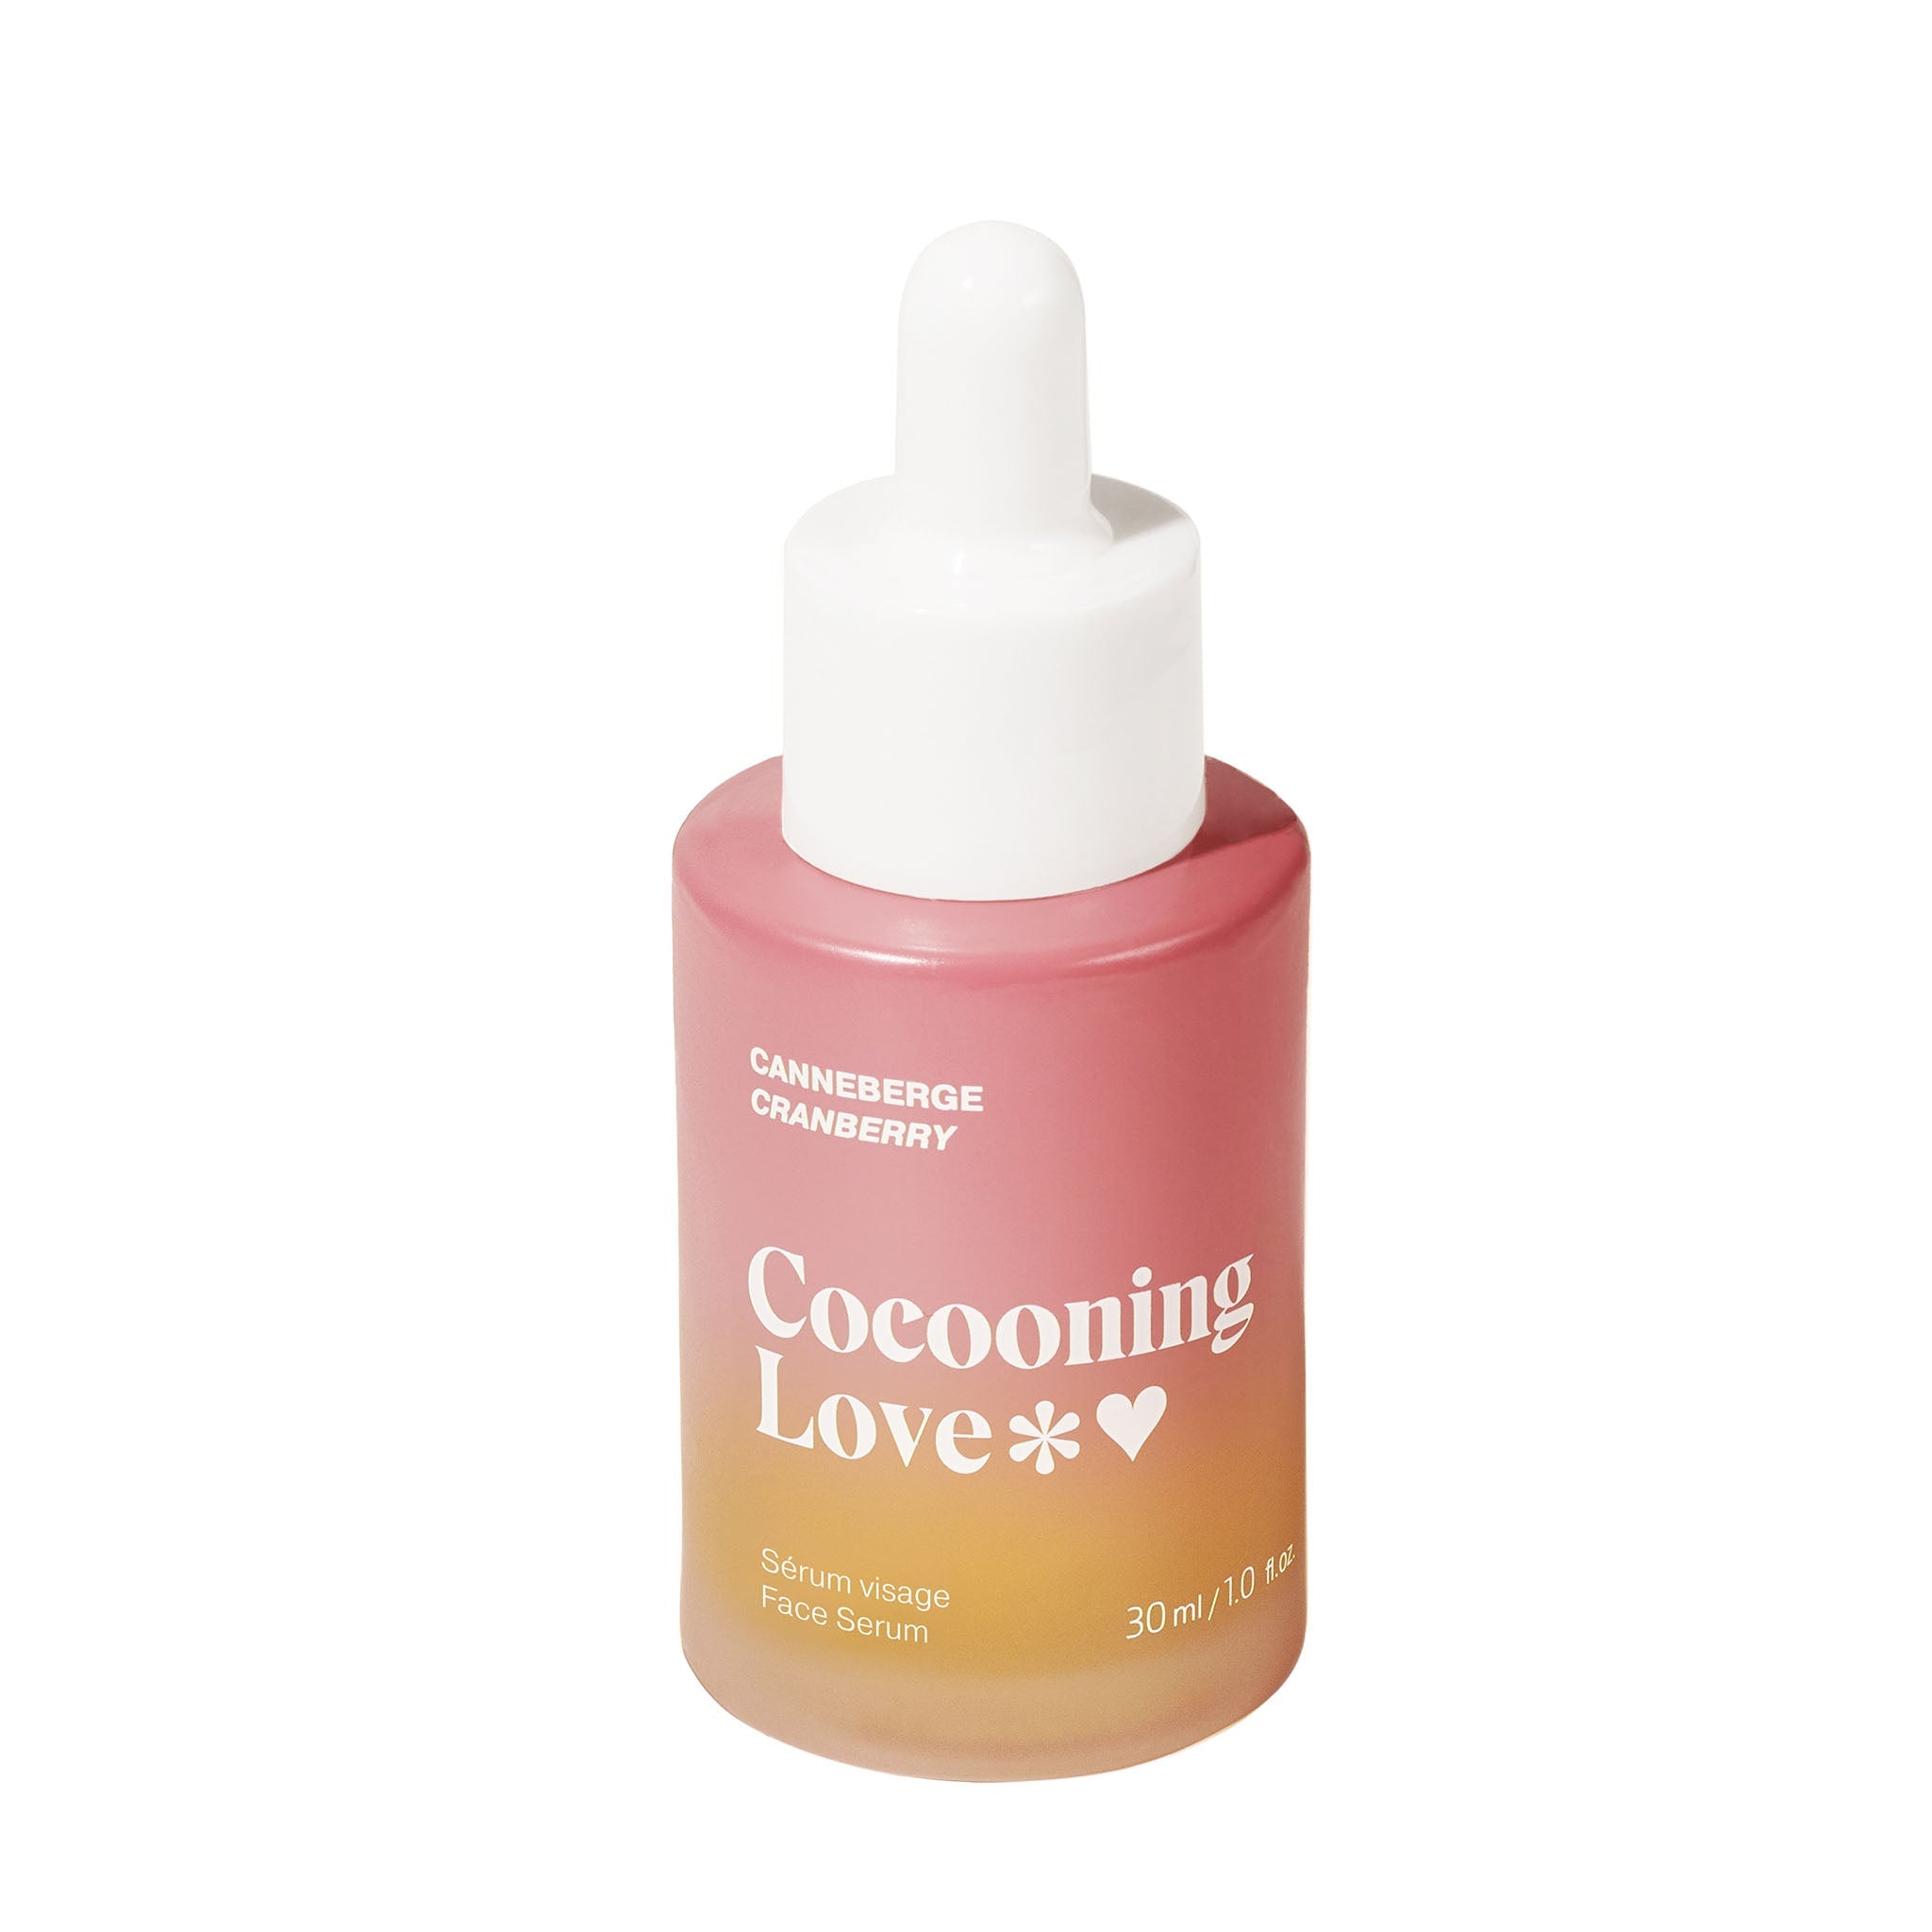 Cocooning Love. Serum Visage Peaux Normales a Seches Canneberge - 30 ml - Concept C. Shop